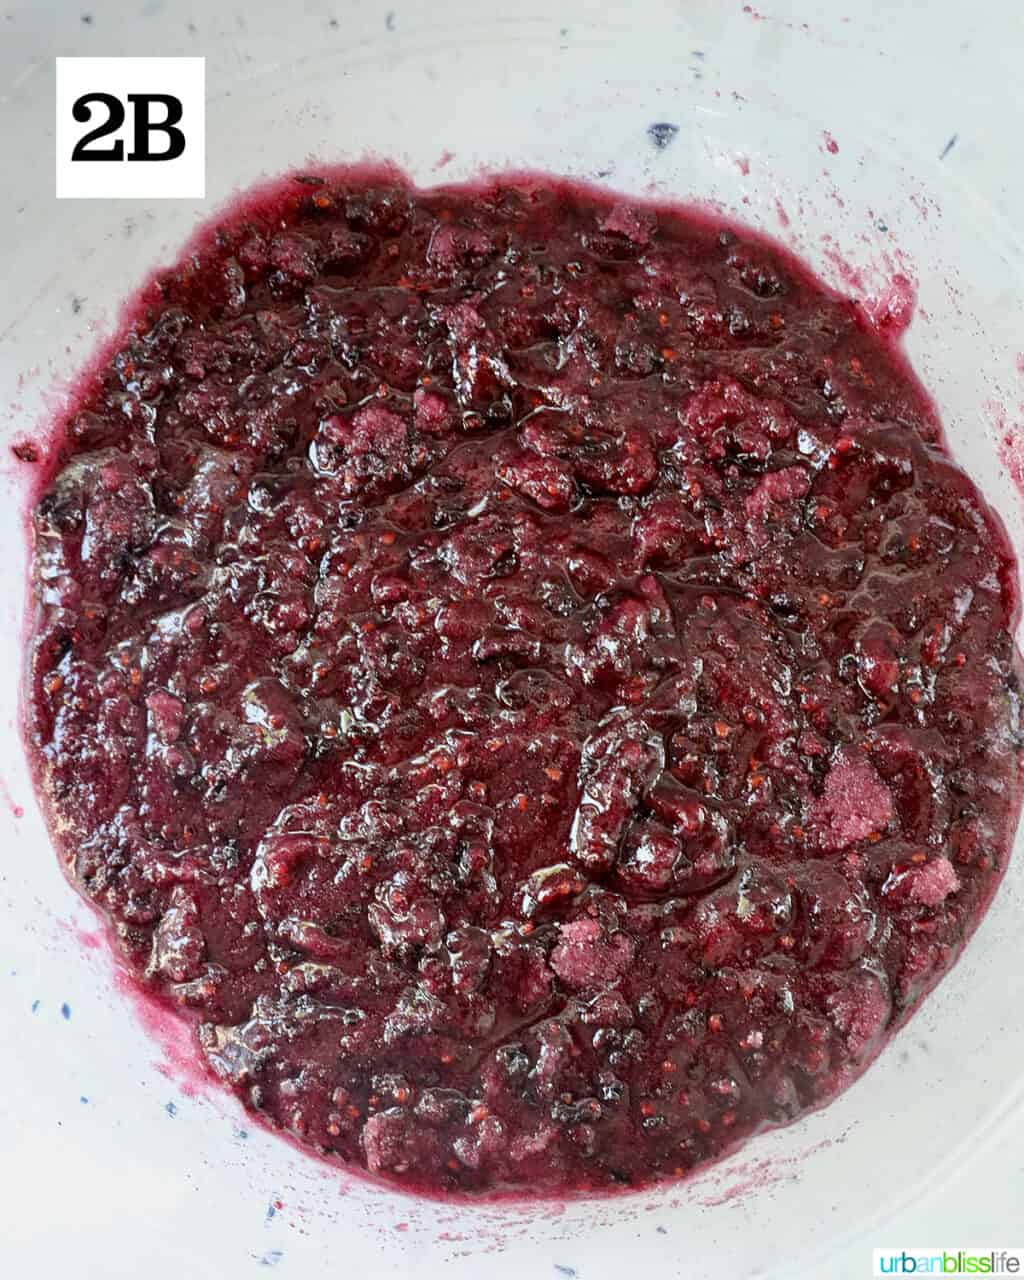 blackberry jam in a bowl.